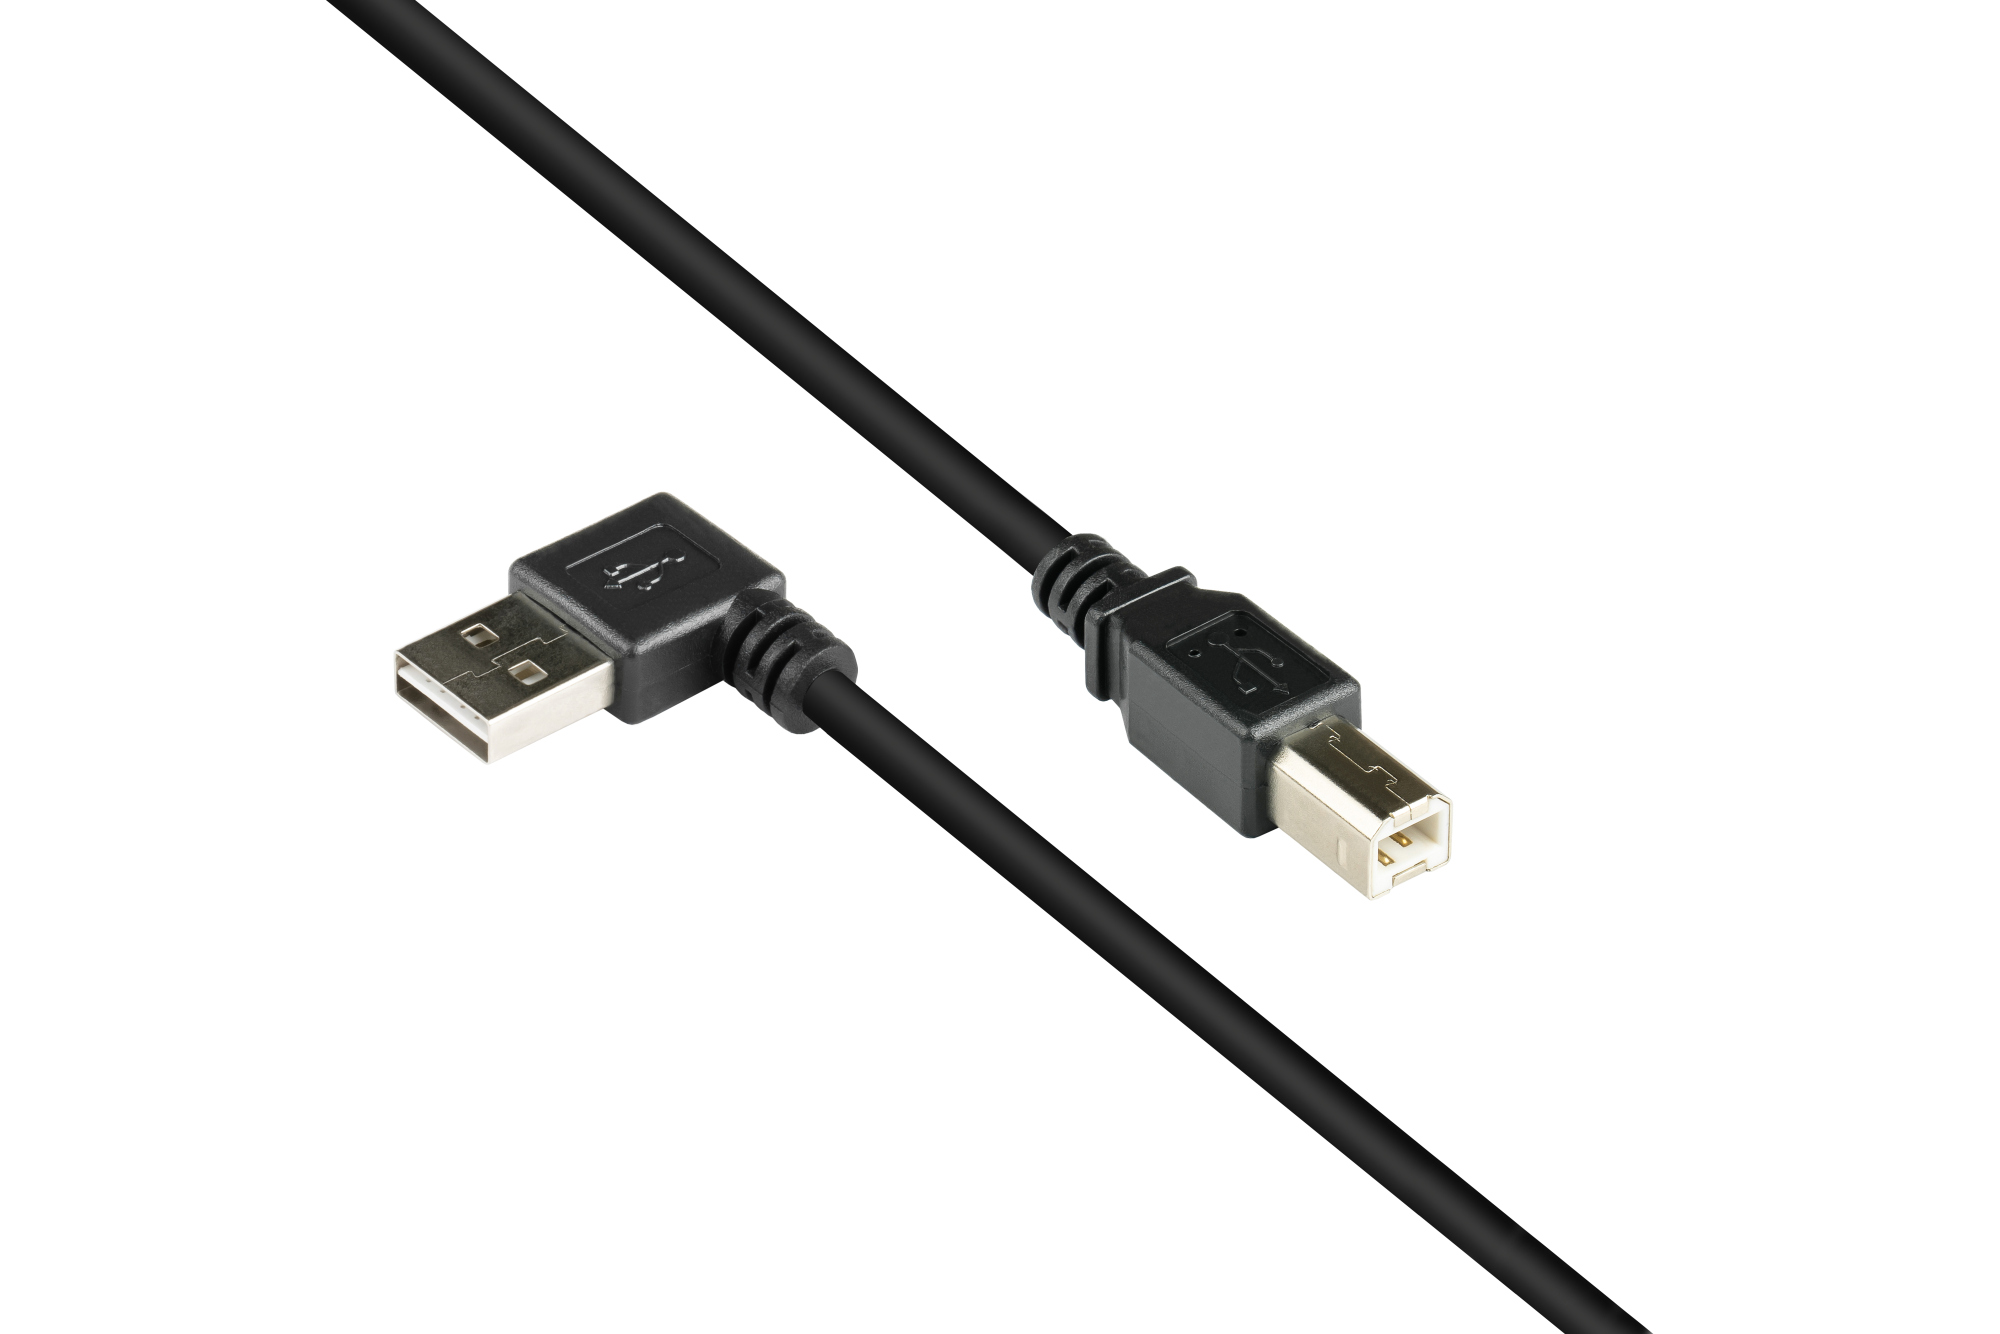 Anschlusskabel USB 2.0 EASY Stecker A gewinkelt an Stecker B, schwarz, 3m